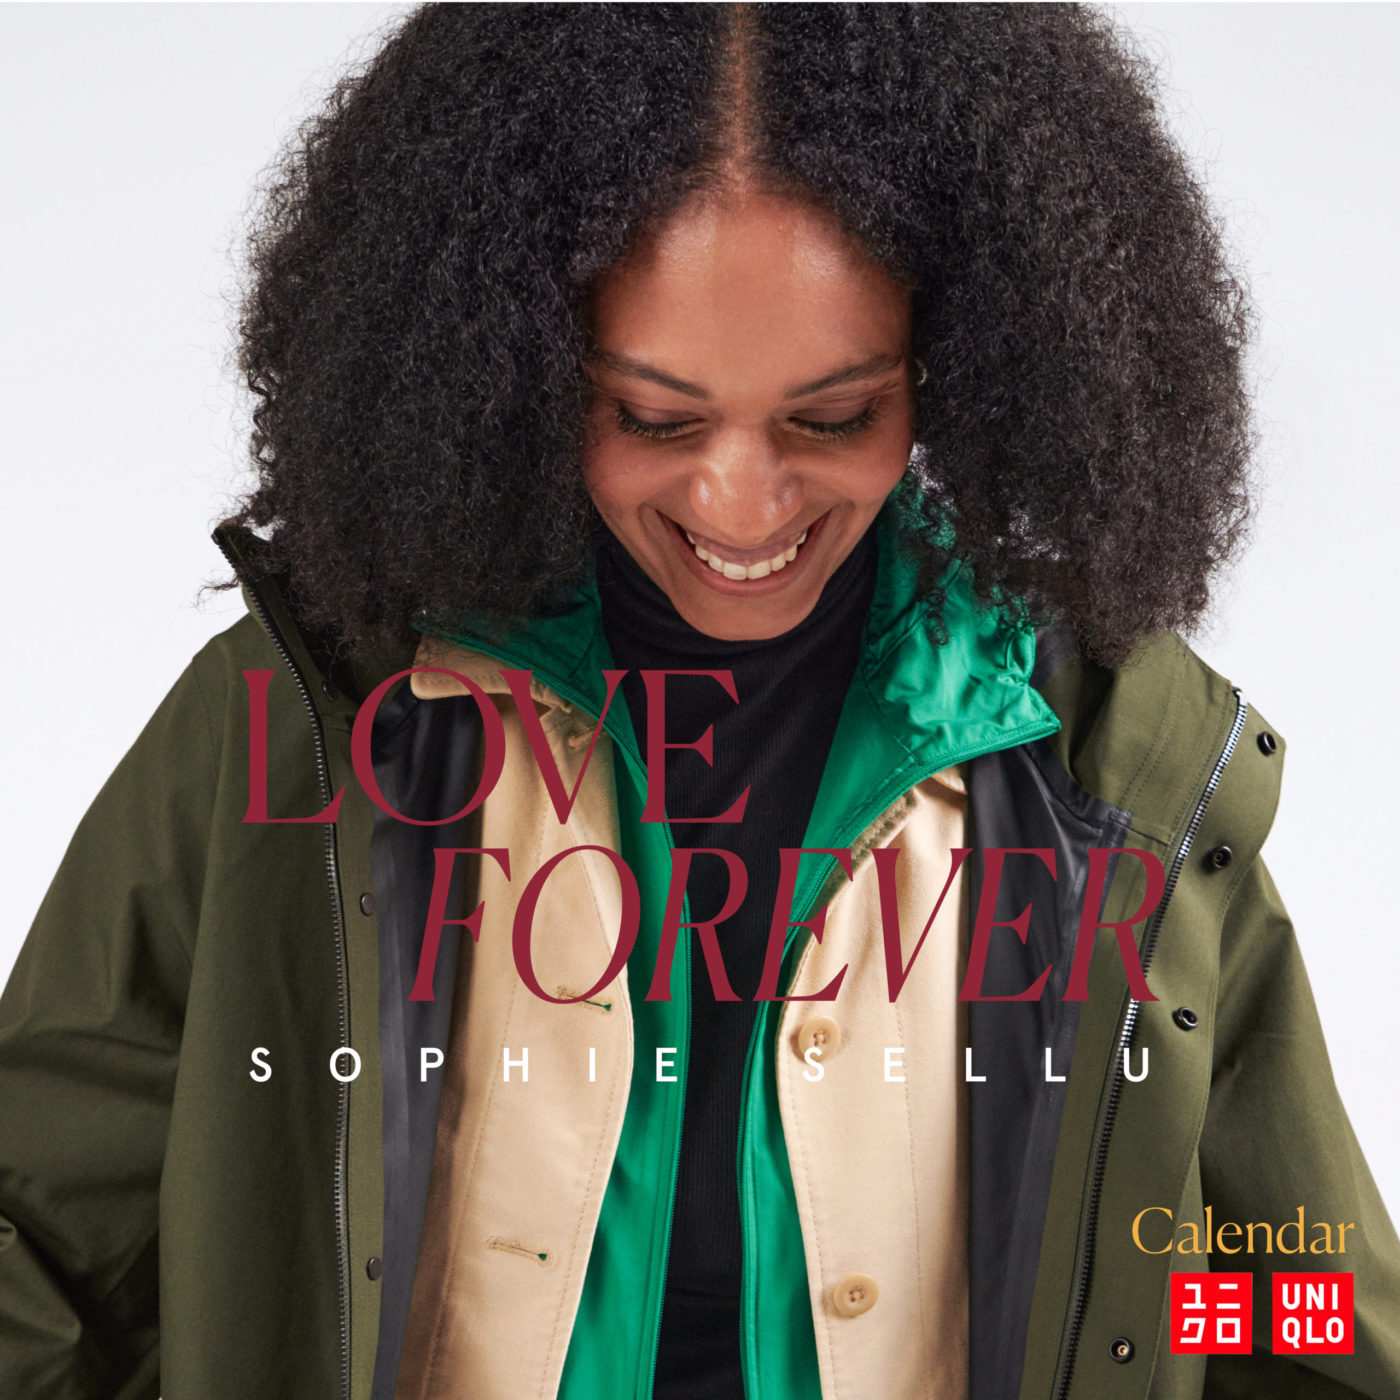 Love Forever: Sophie Sellu